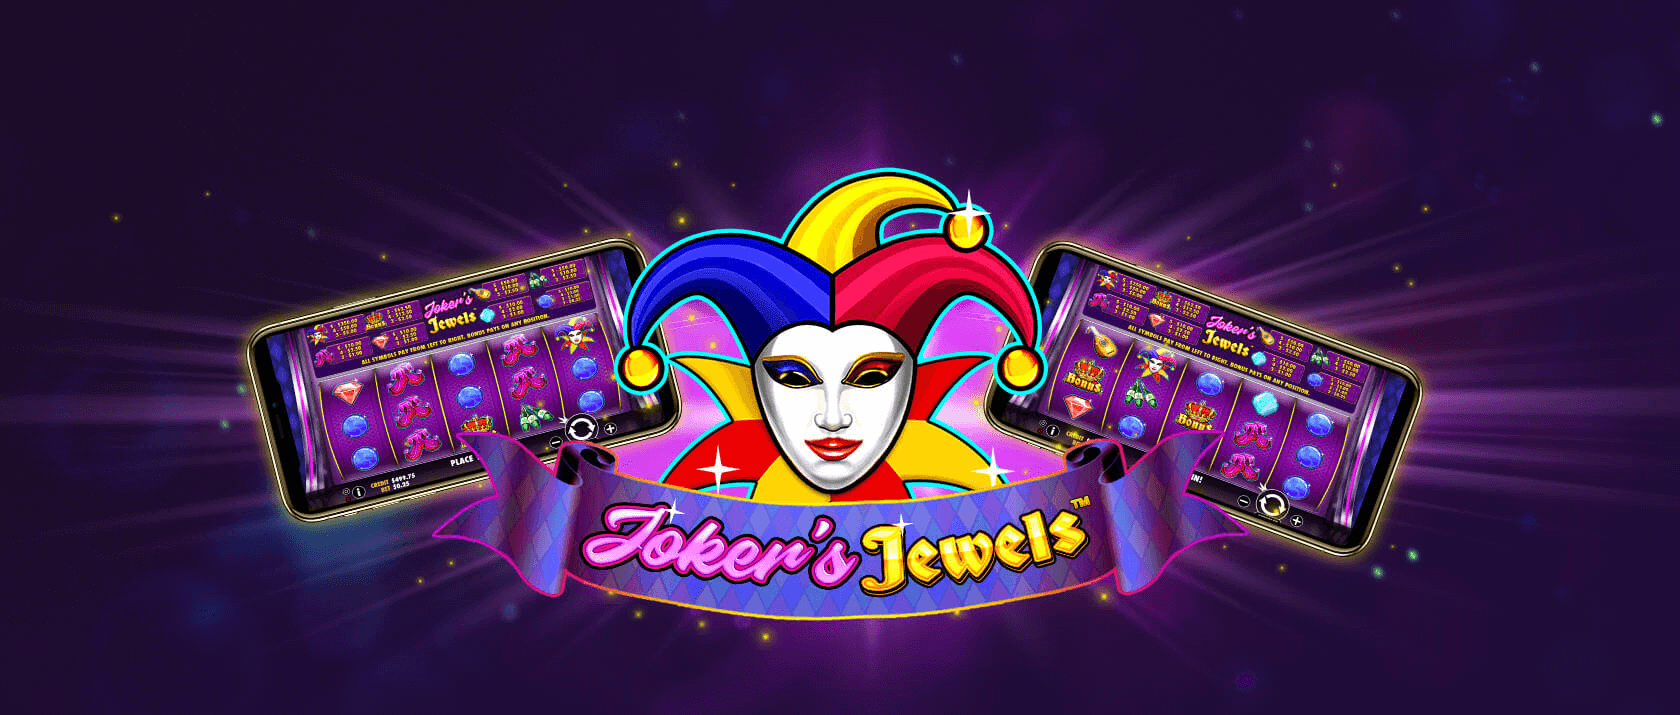 Joker’s Jewels Slot